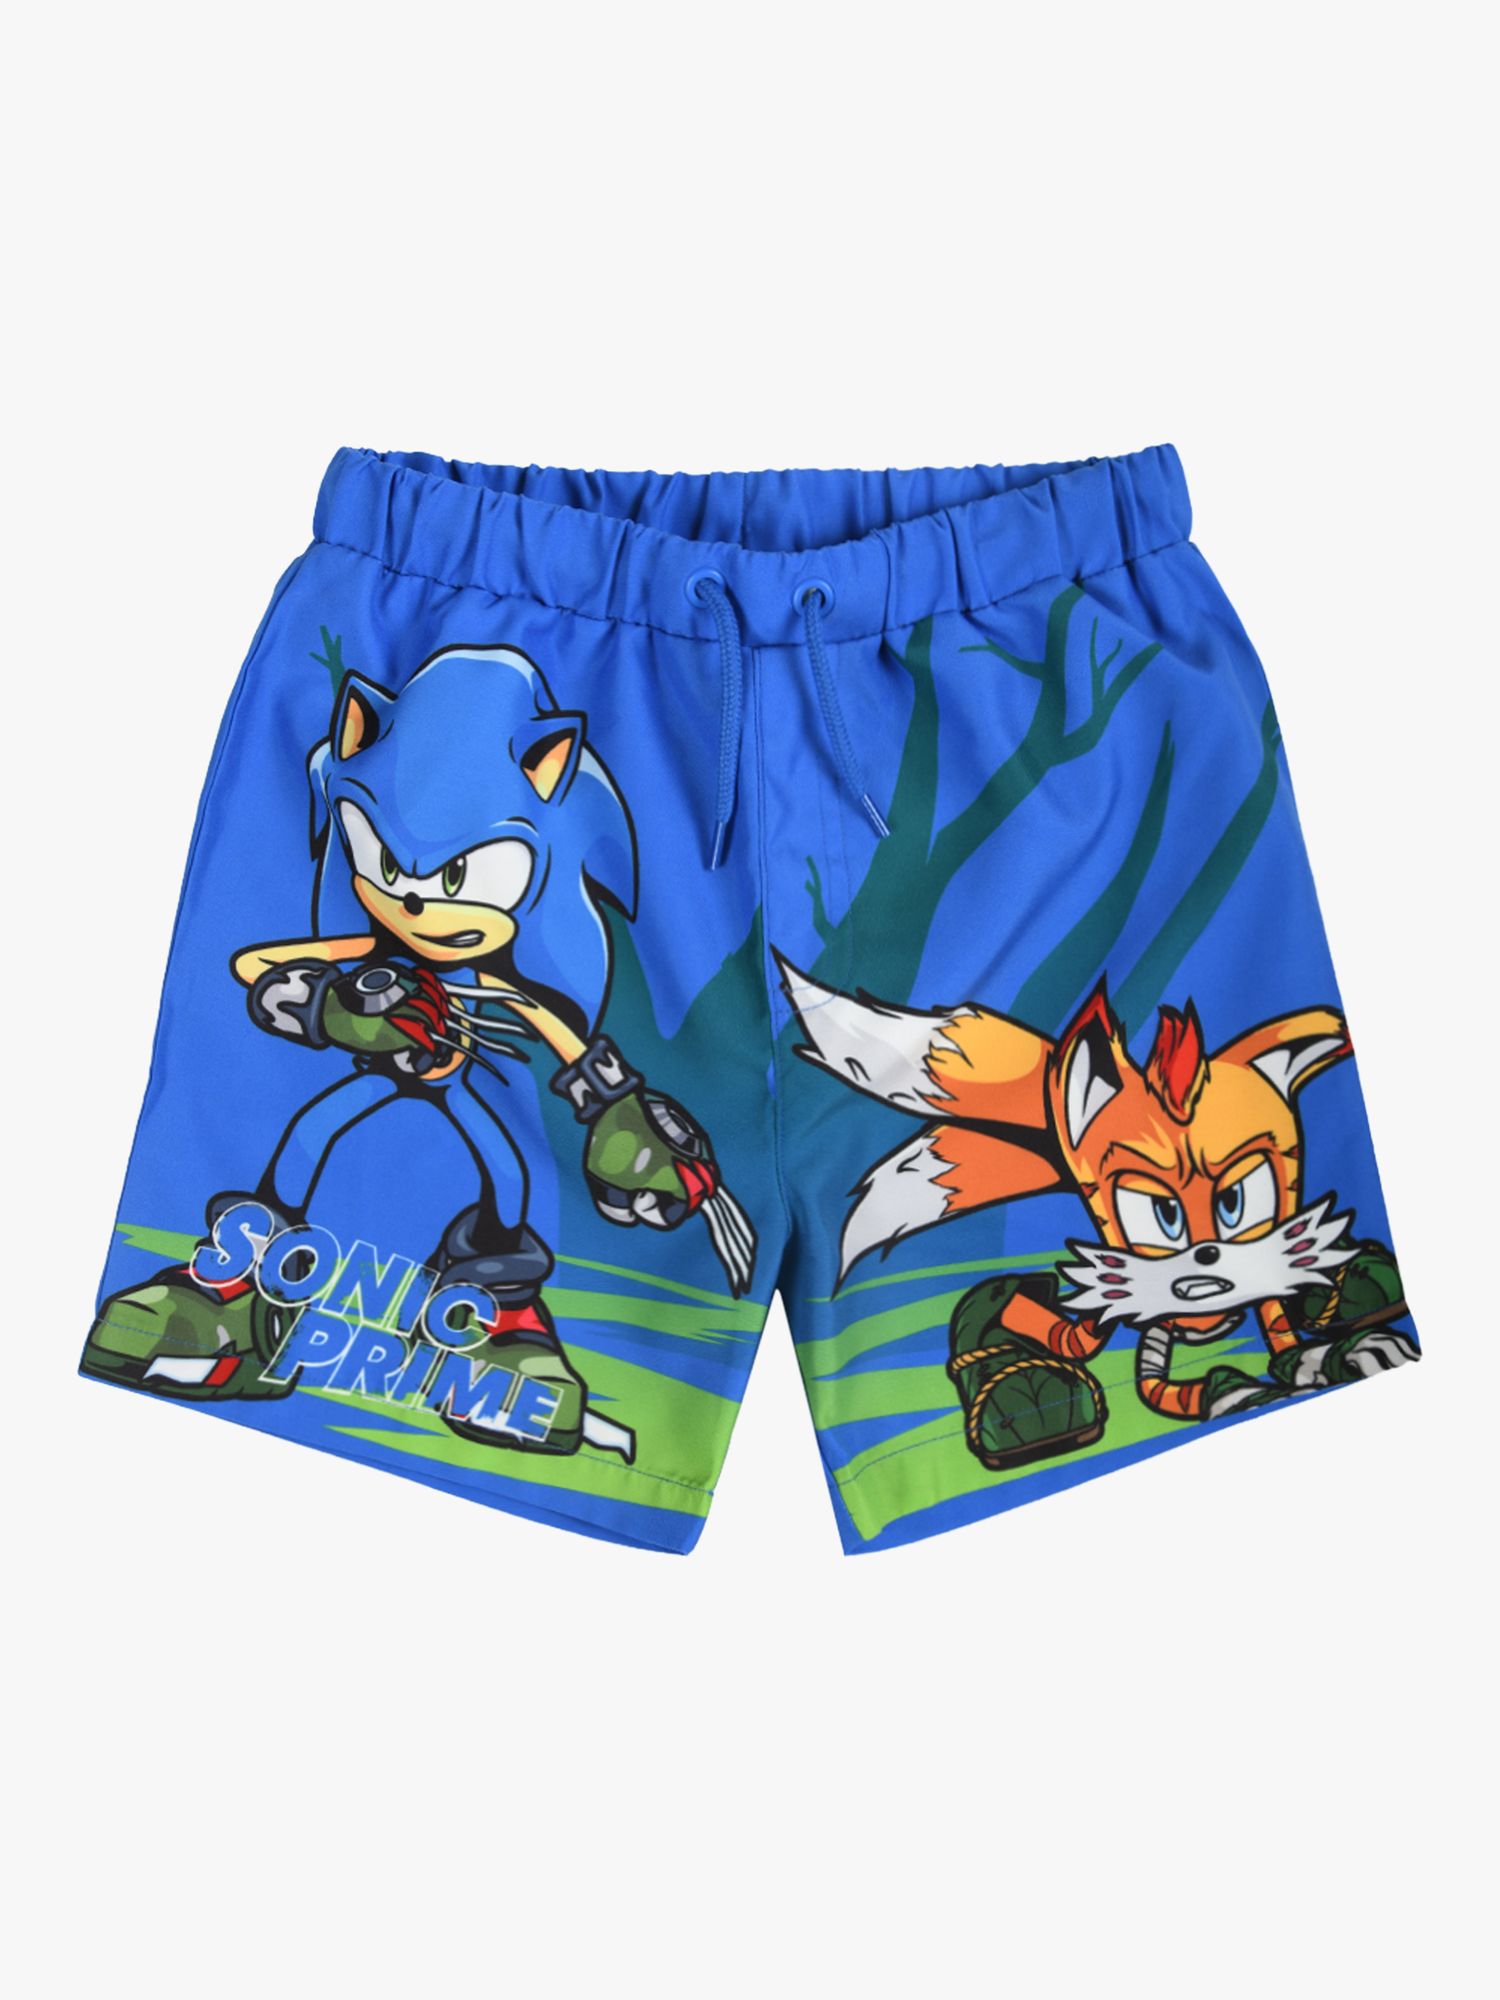 Brand Threads Kids' Sonic Prime Swim Shorts, Blue/Multi, 4-5 years